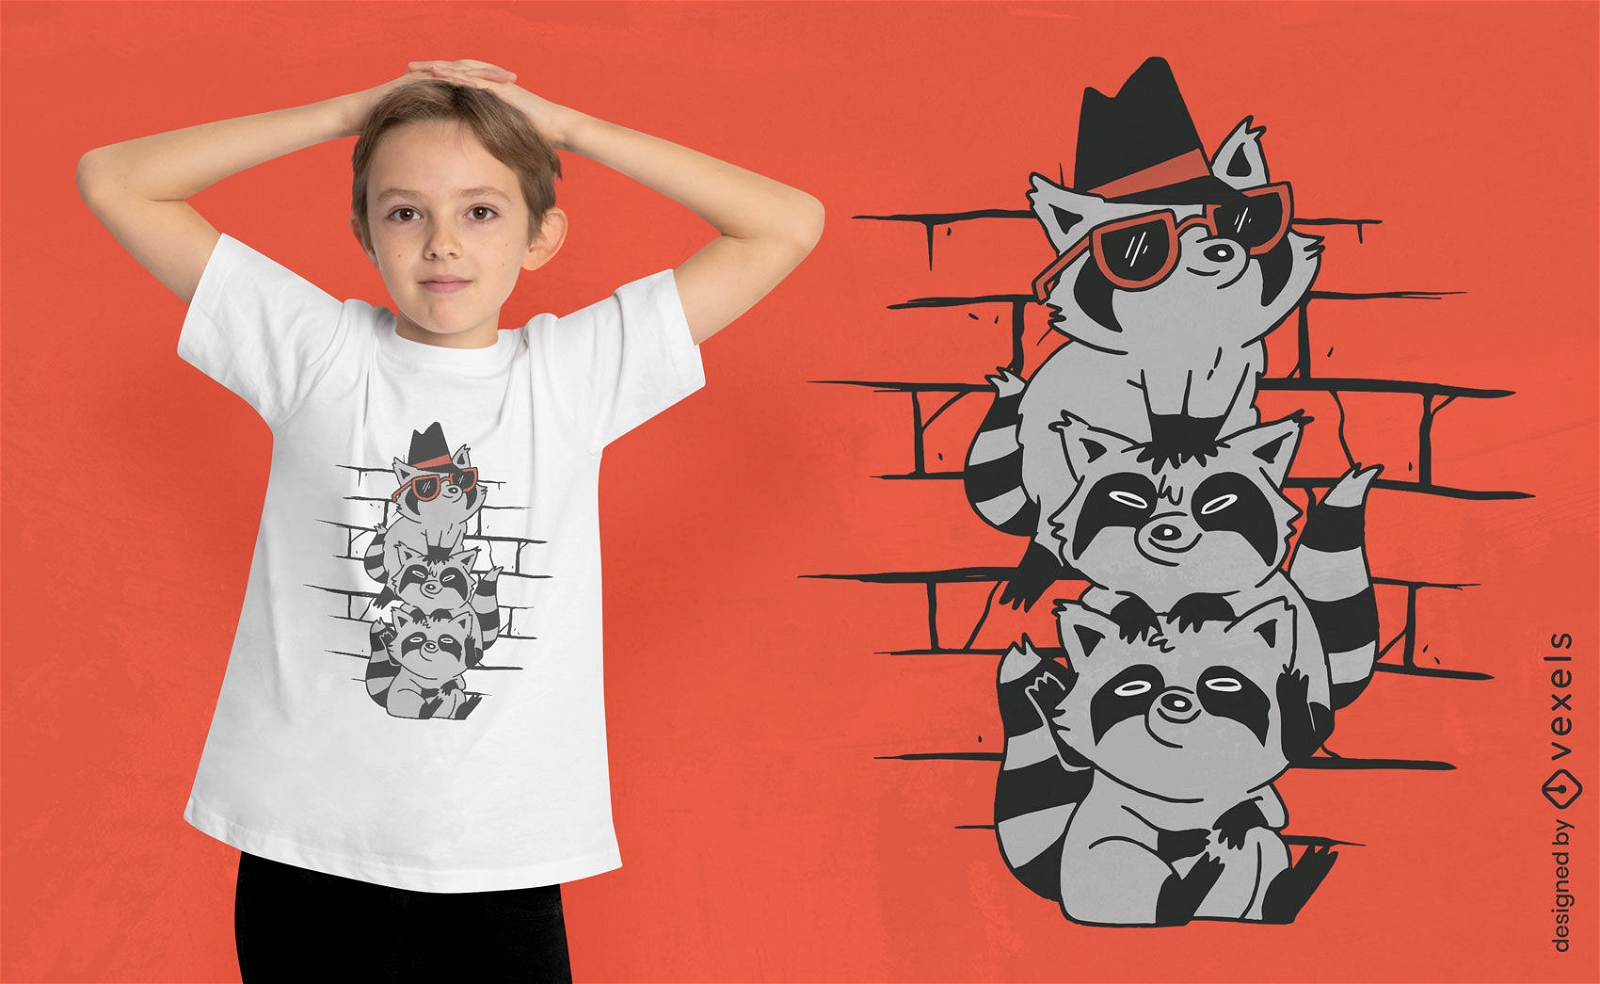 Raccoon gang t-shirt design